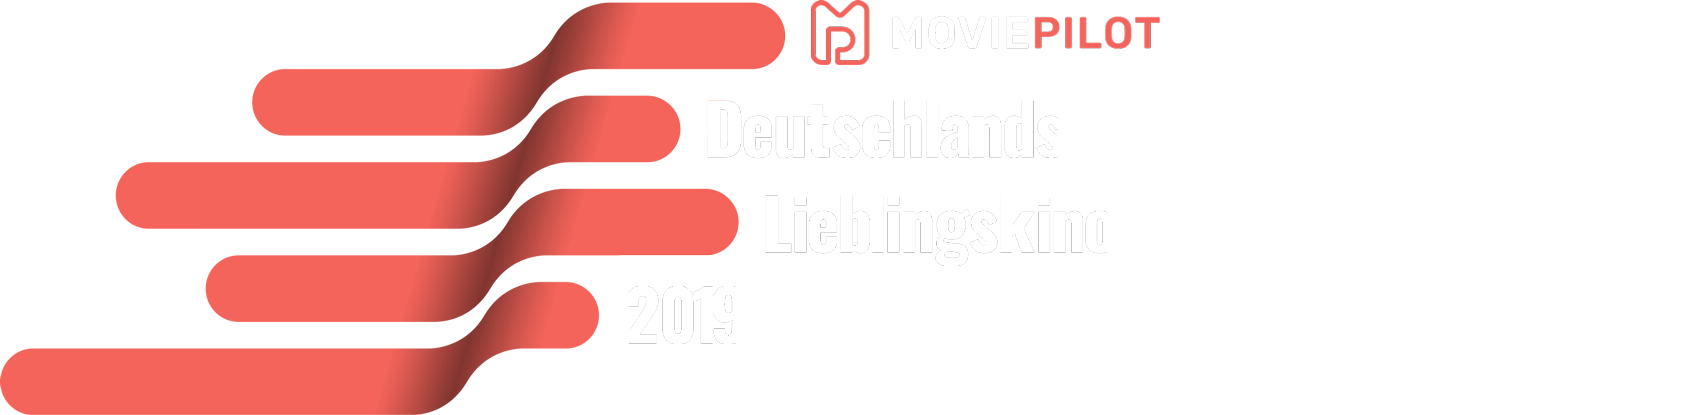 Moviepilot präsentiert Deutschlands Lieblingskino 2019